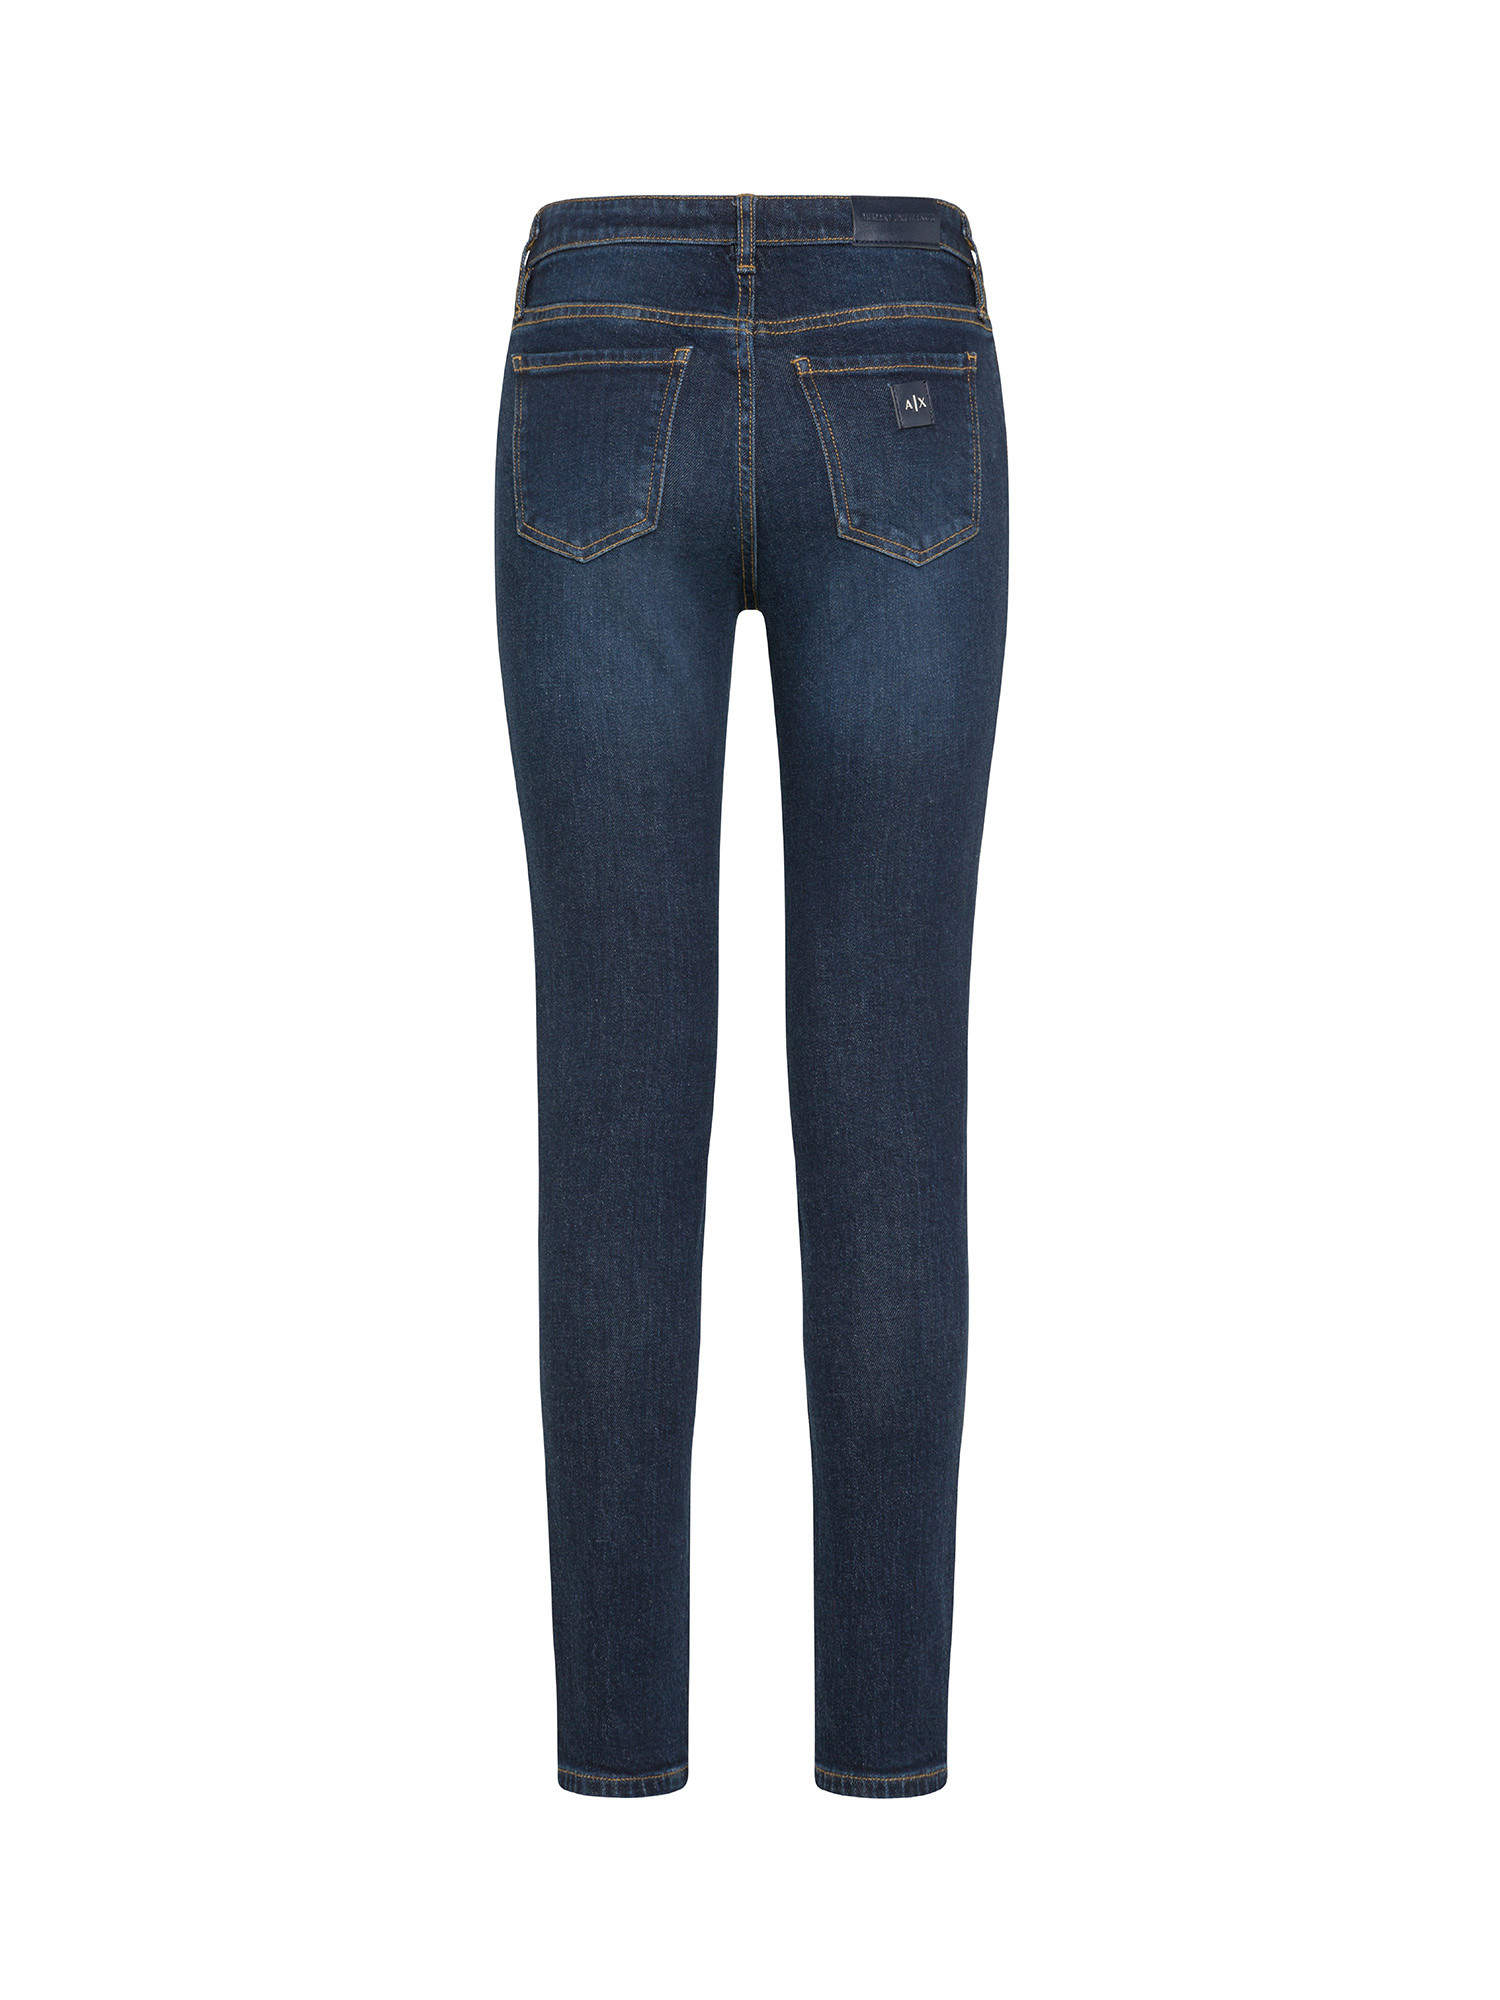 Armani Exchange - Jeans cinque tasche, Denim, large image number 1